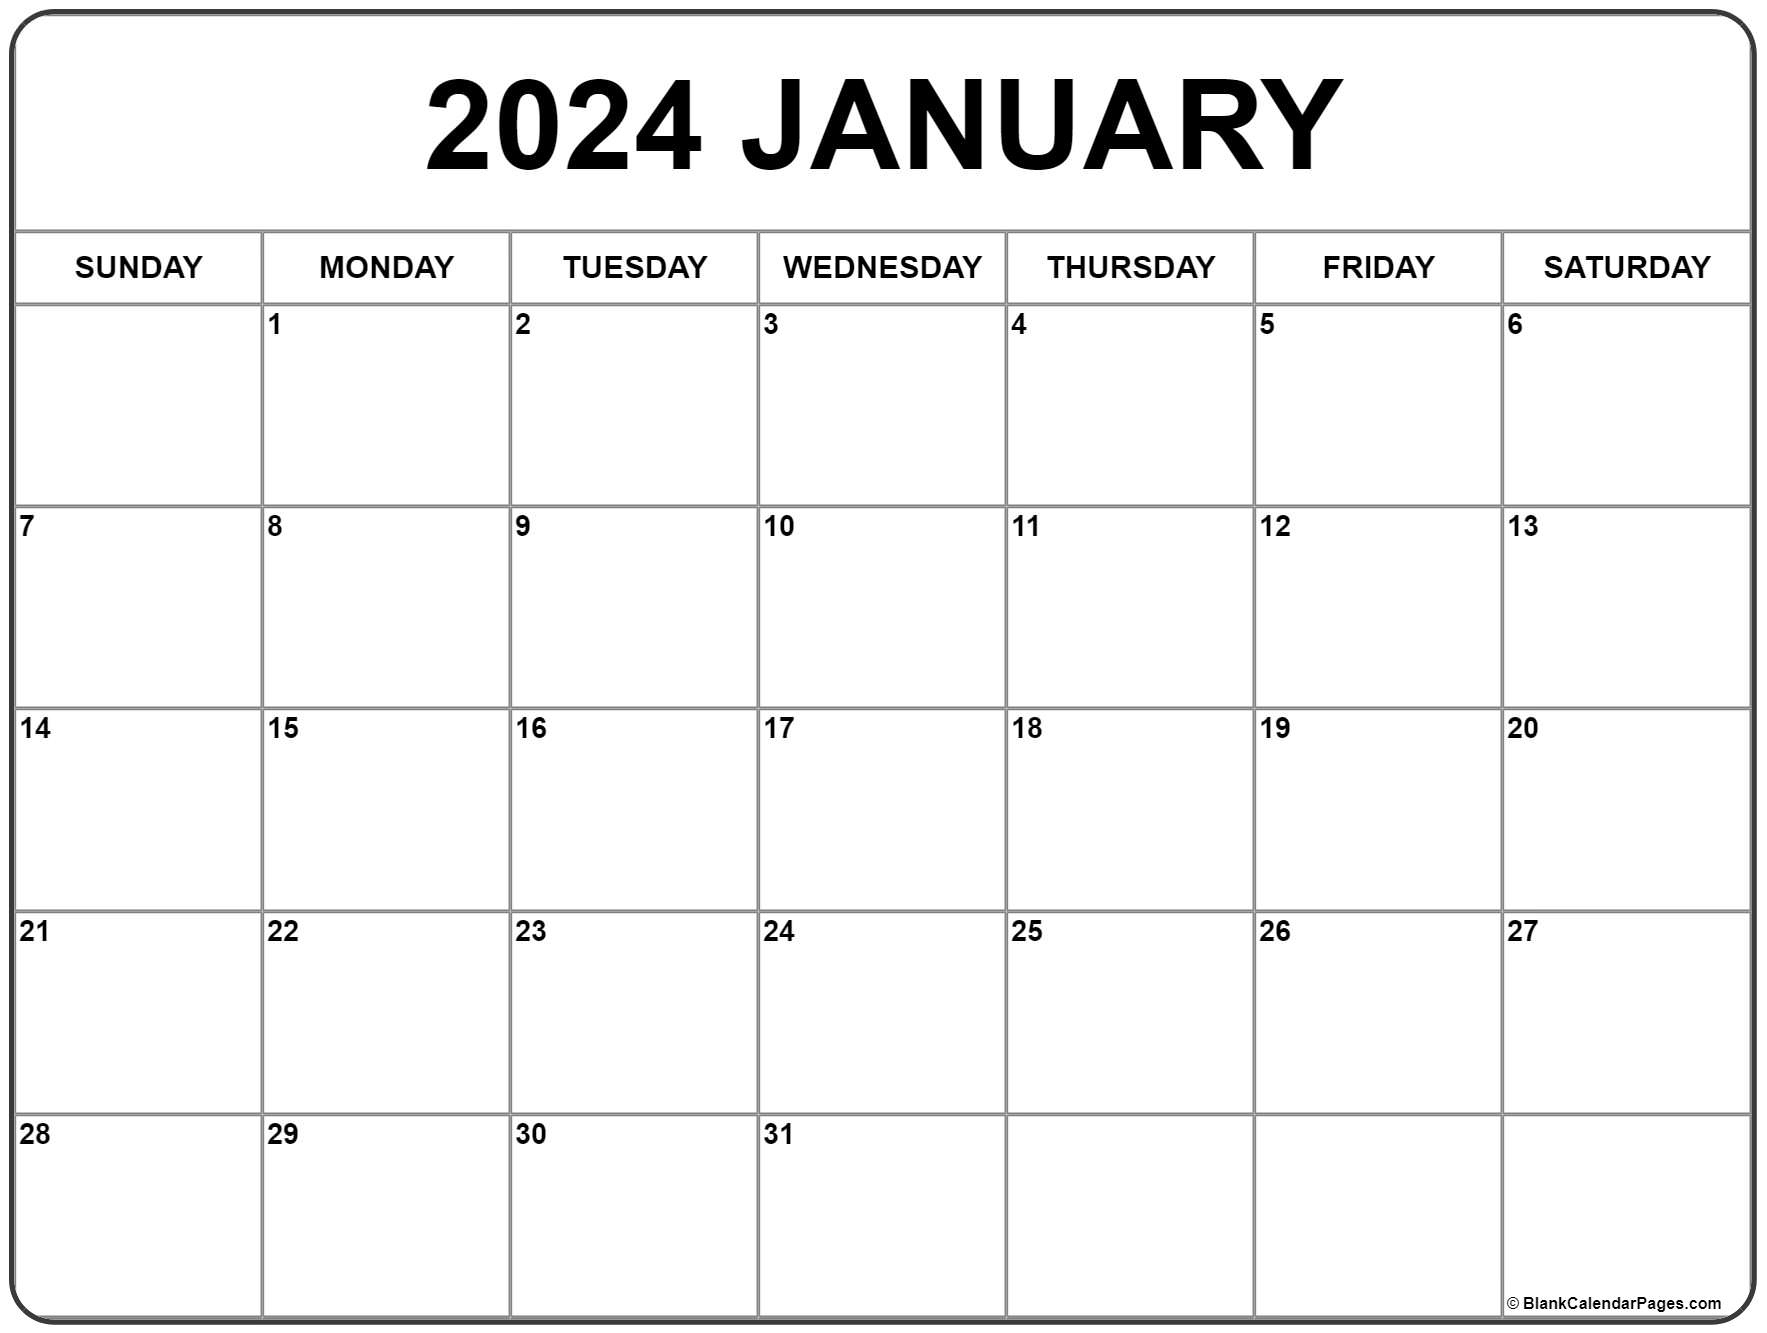 January 2024 Calendar | Free Printable Calendar | Printable Calendar 2024 January To June